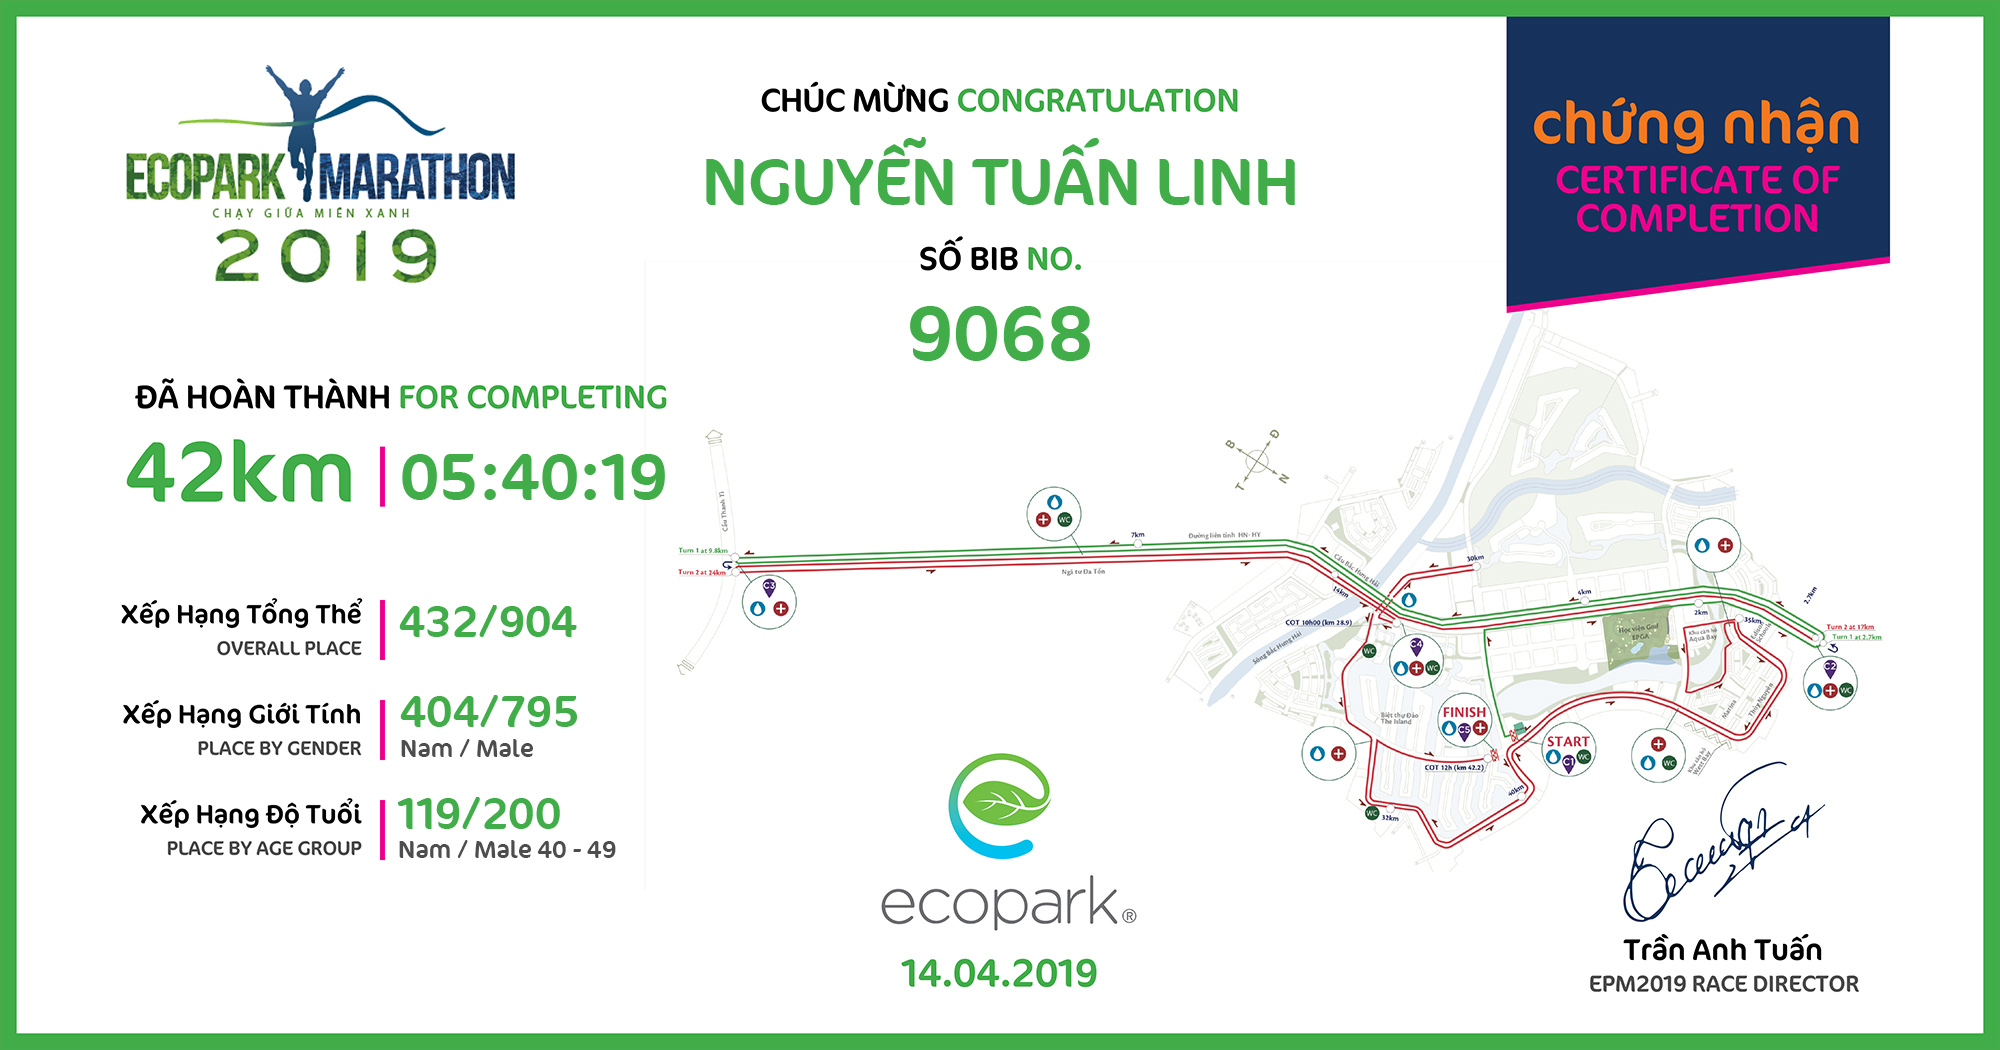 9068 - Nguyễn Tuấn Linh